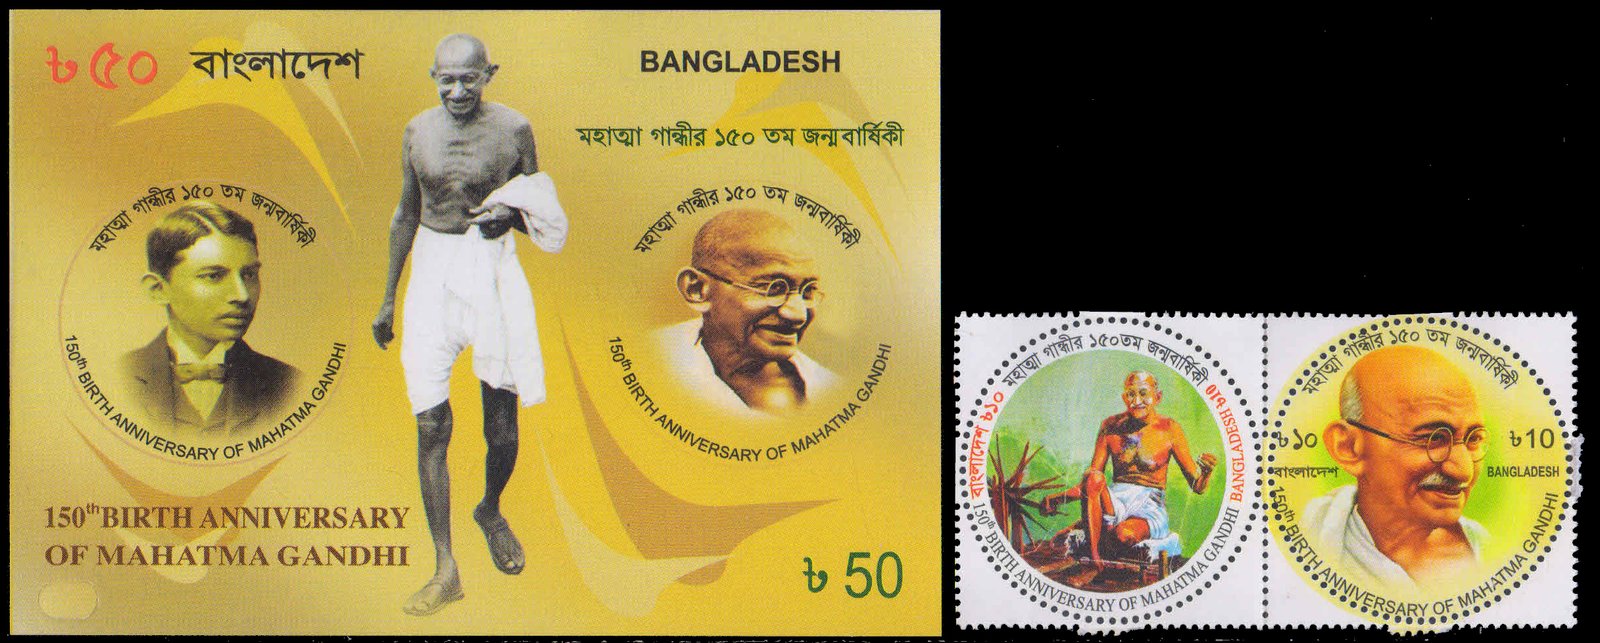 BANGLADESH 2020 - 150th Birth Anniversary of Mahatma Gandhi, Set of 2 Round Stamps & Imperf MS